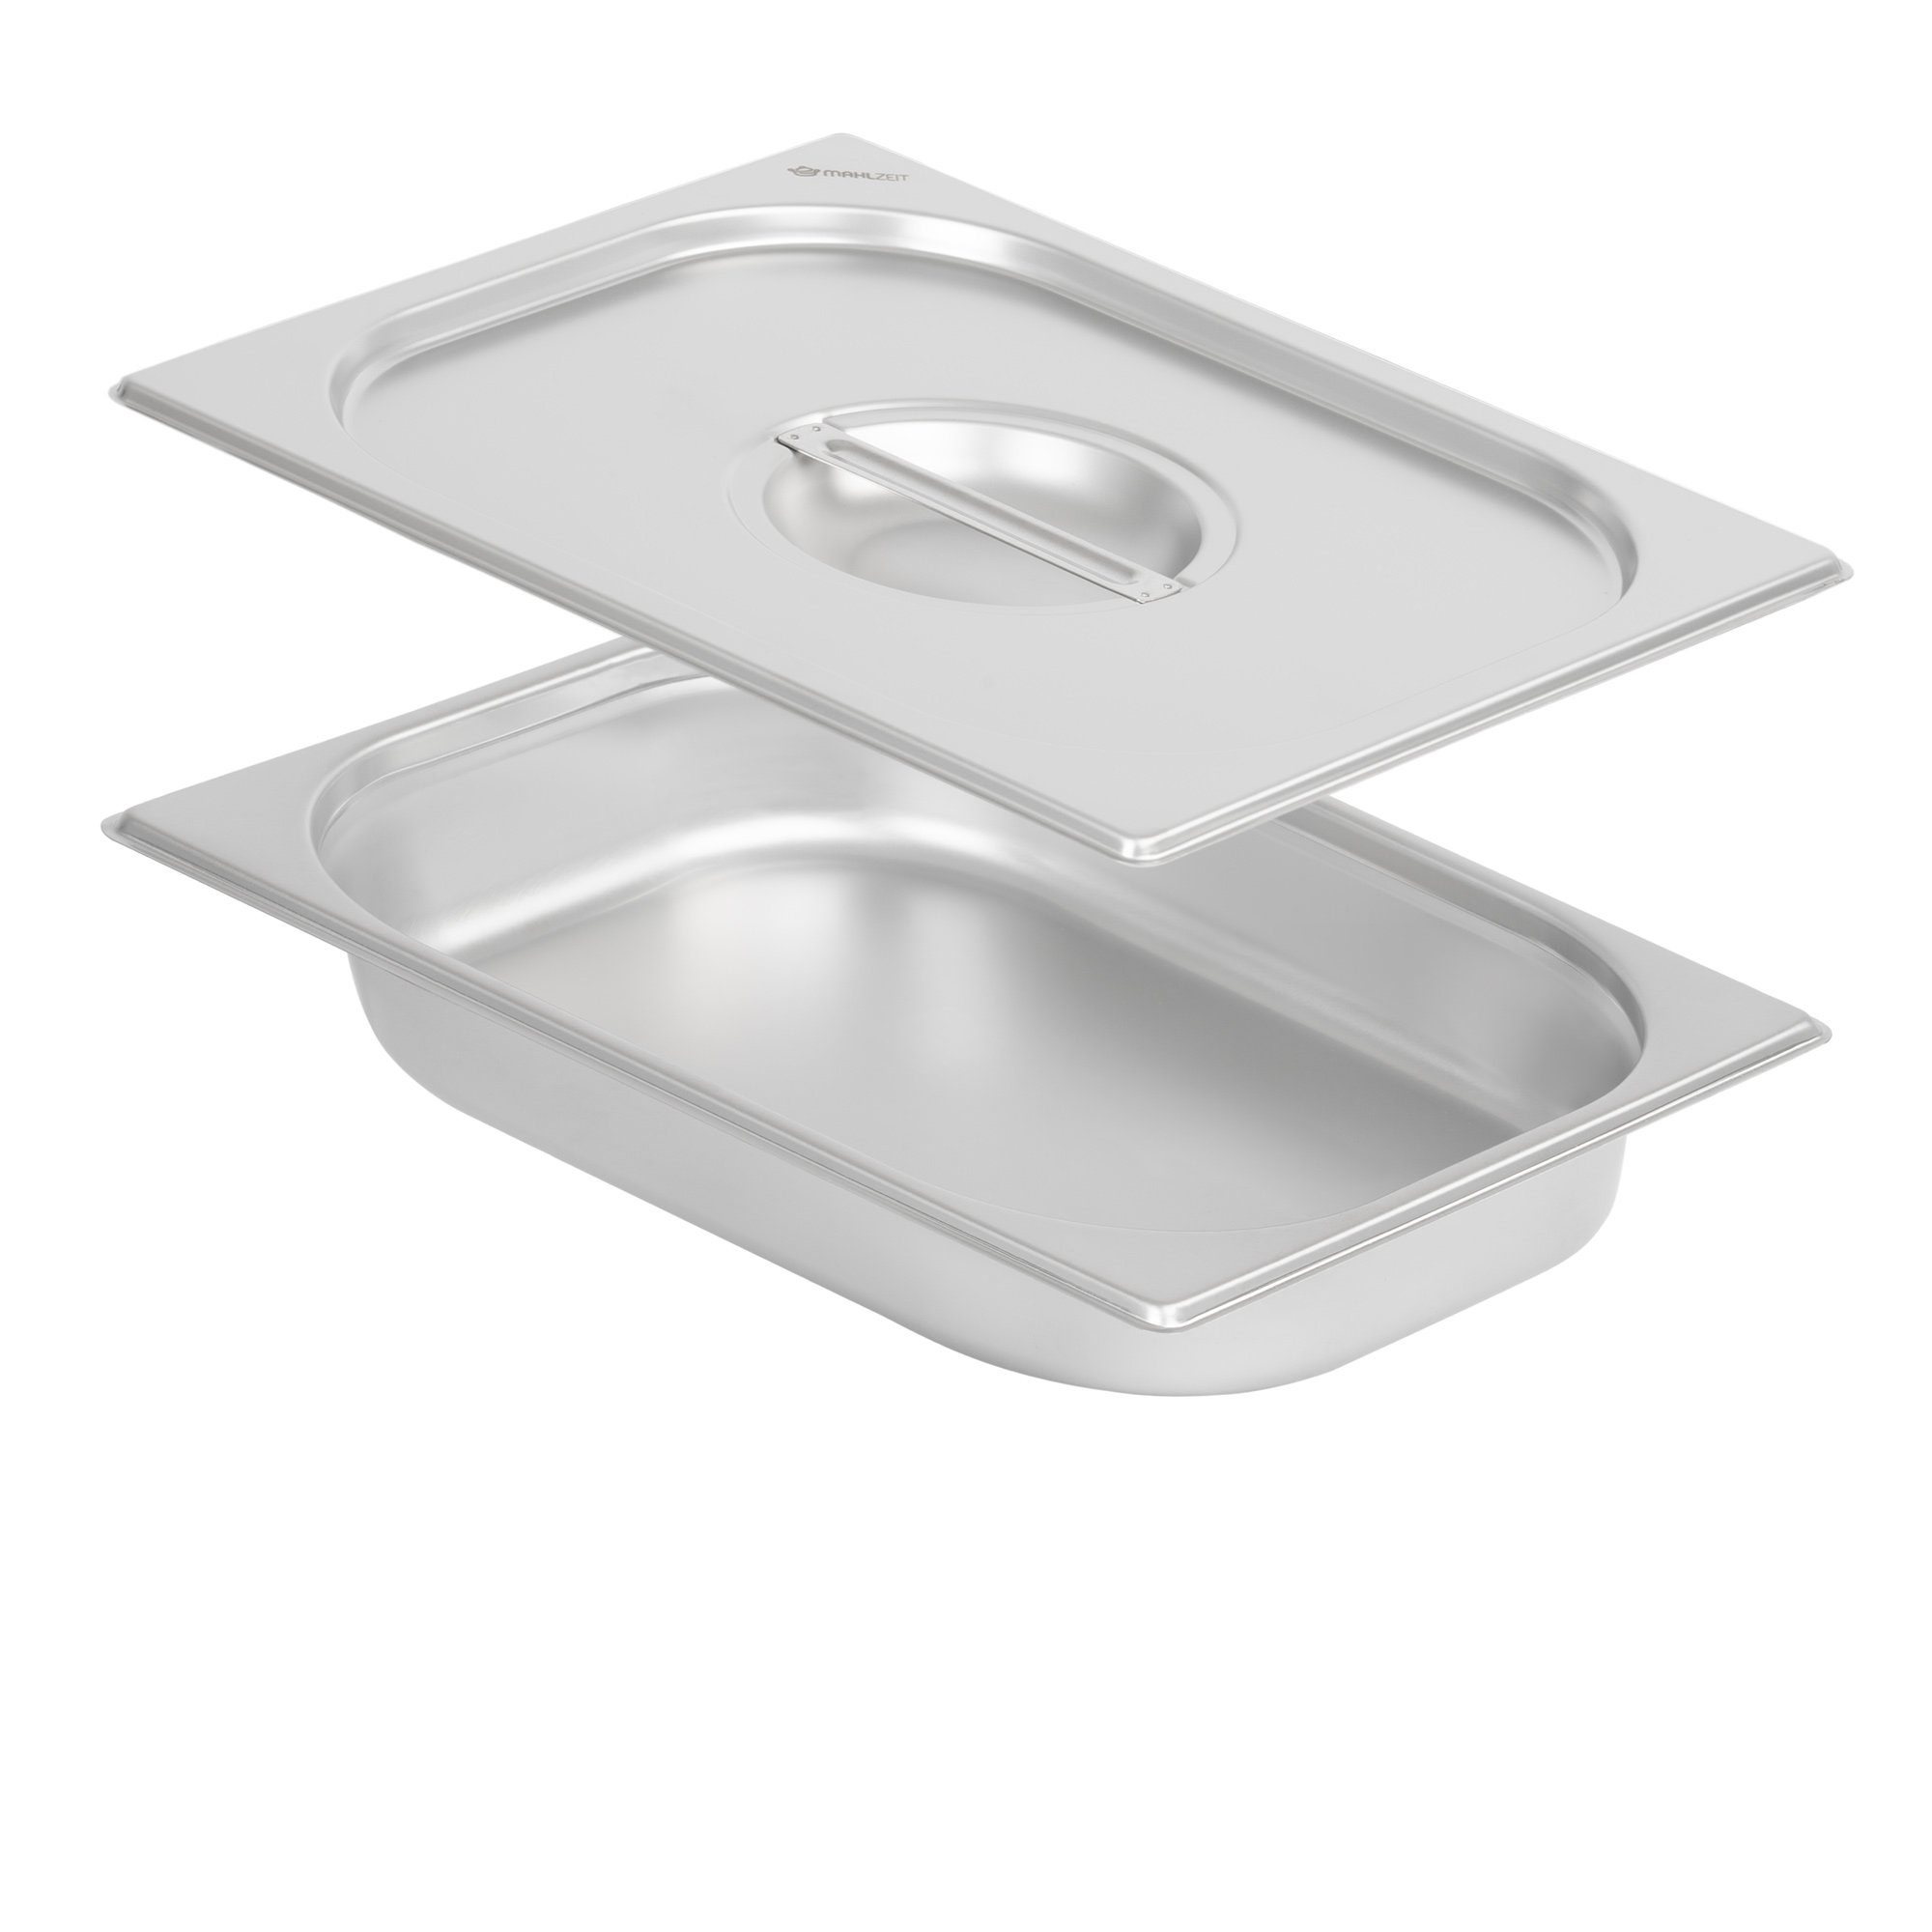 Mahlzeit Thermobehälter GN Behälter 1/2 mit Deckel, Höhe 65 mm, Edelstahl Wärmebehälter, Edelstahl, (Set, 2-tlg., 1x 1/2 GN Behälter mit Deckel), für Chafing Dish